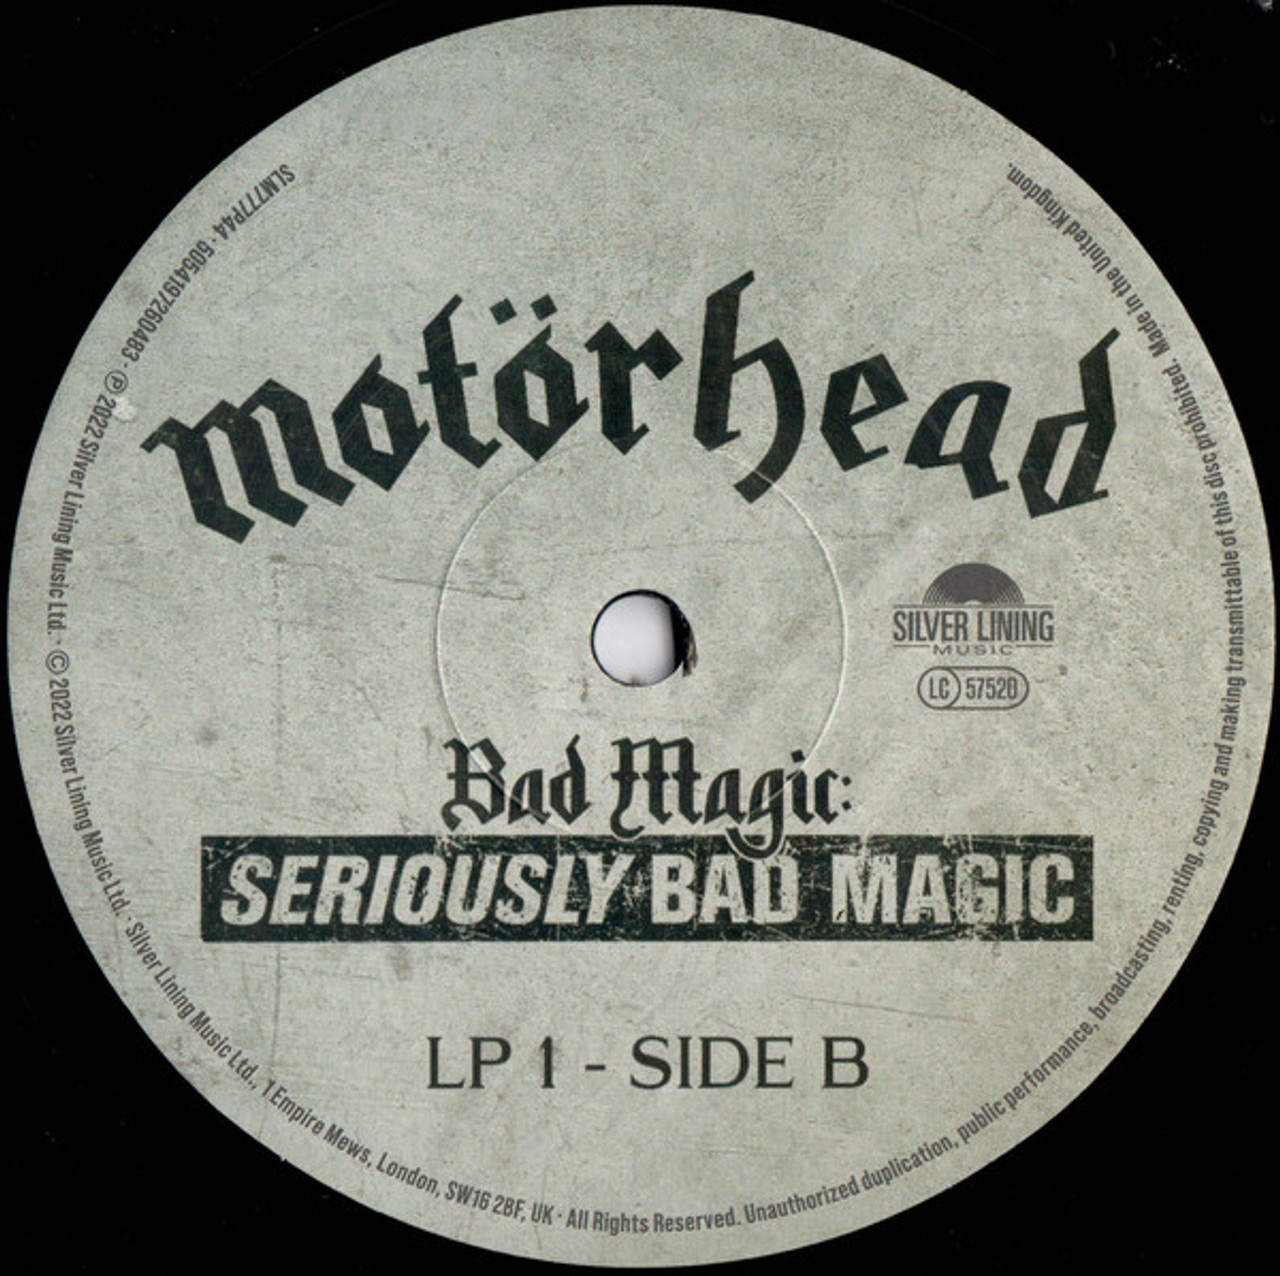 Motorhead – Bad Magic Review